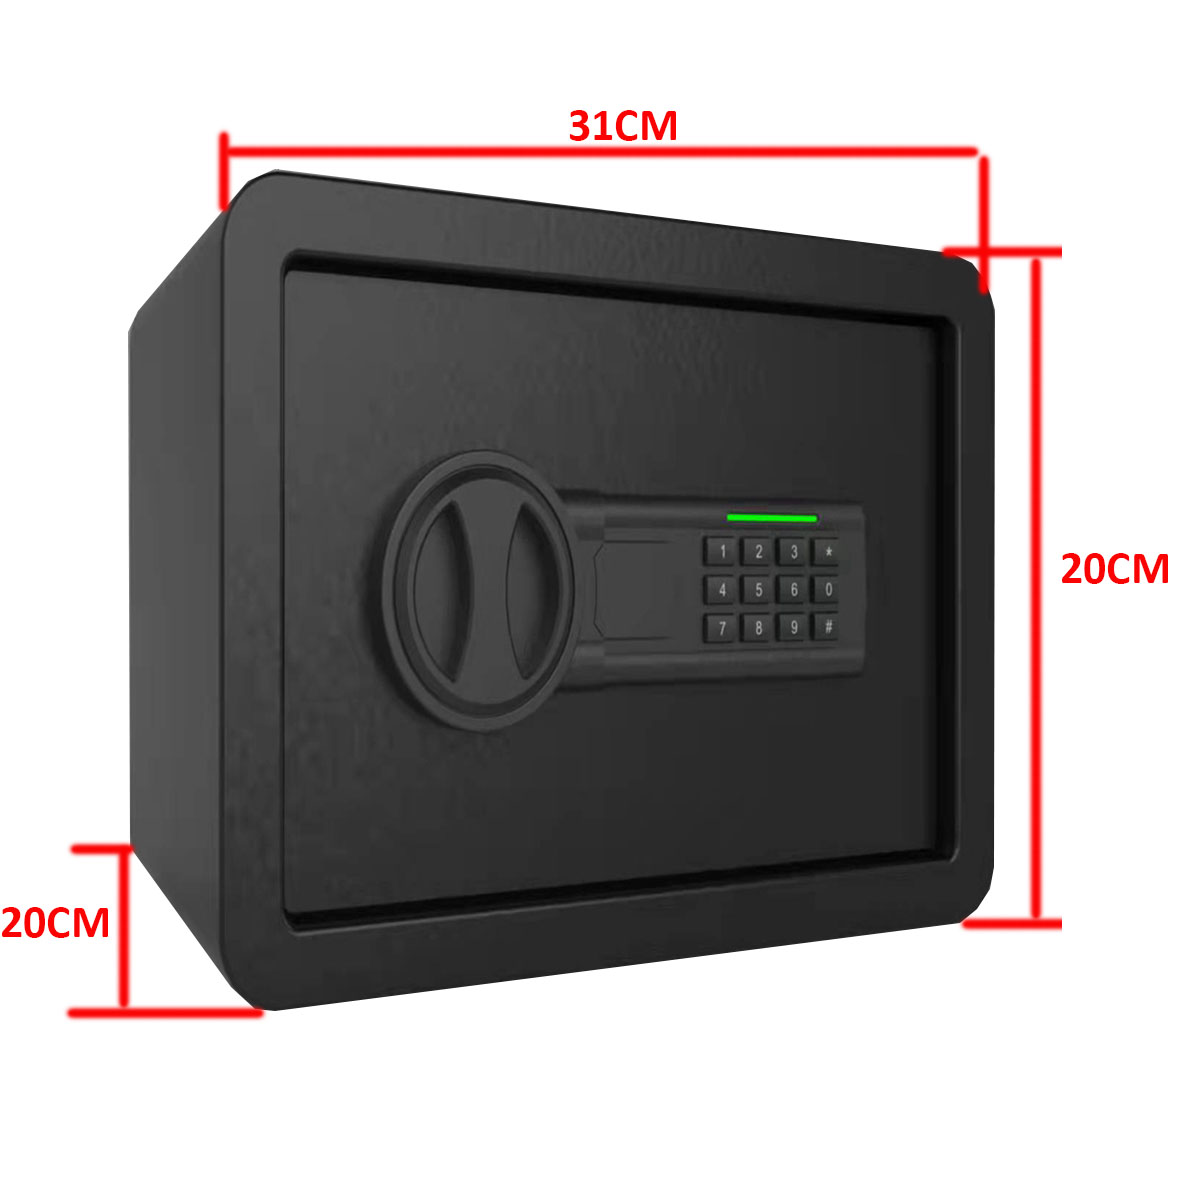 Mingyou 20SEK Electronic Home Steel Digital Safety Locker Safe Box Gun Safes Tresore Coffre Fort 